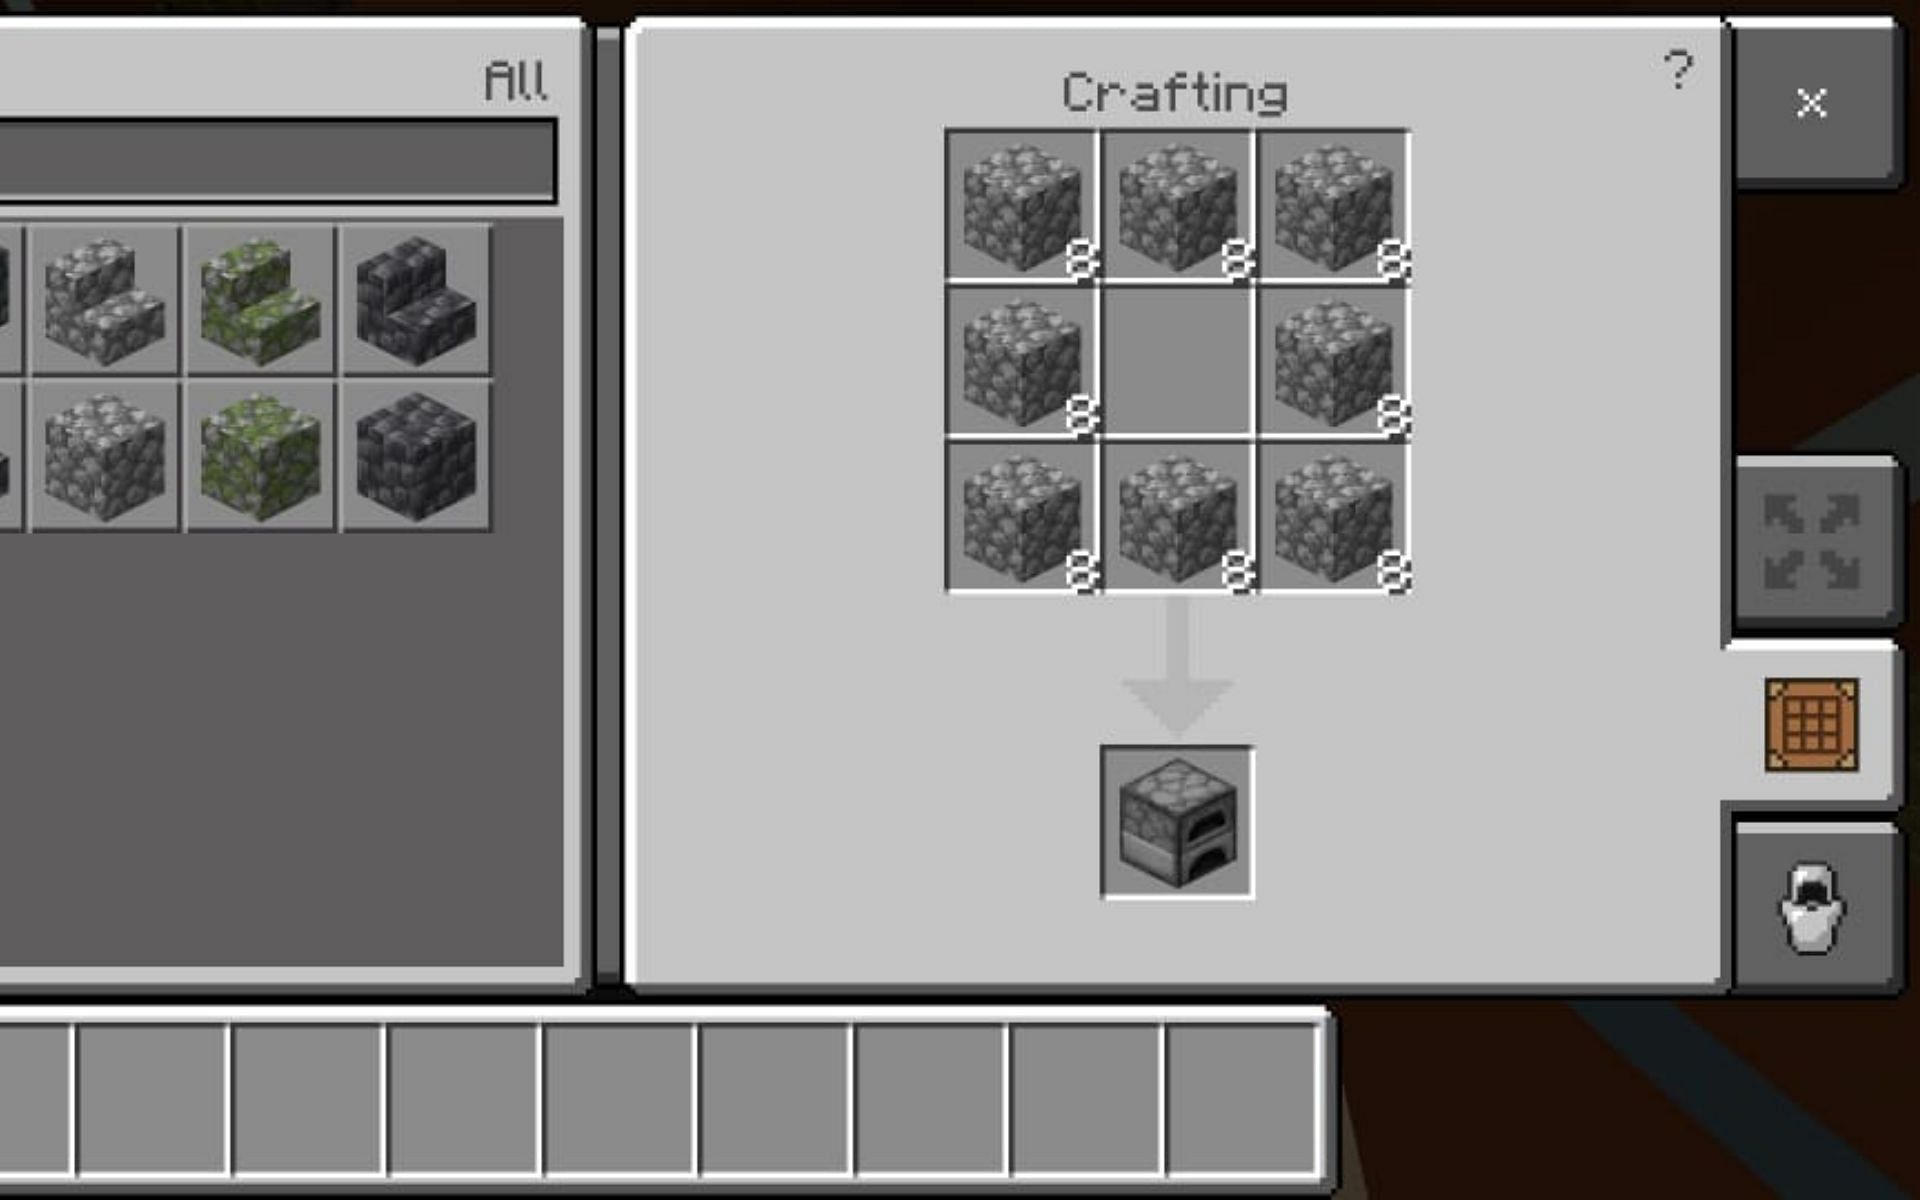 Crafting a Furnace (Image via Minecraft)